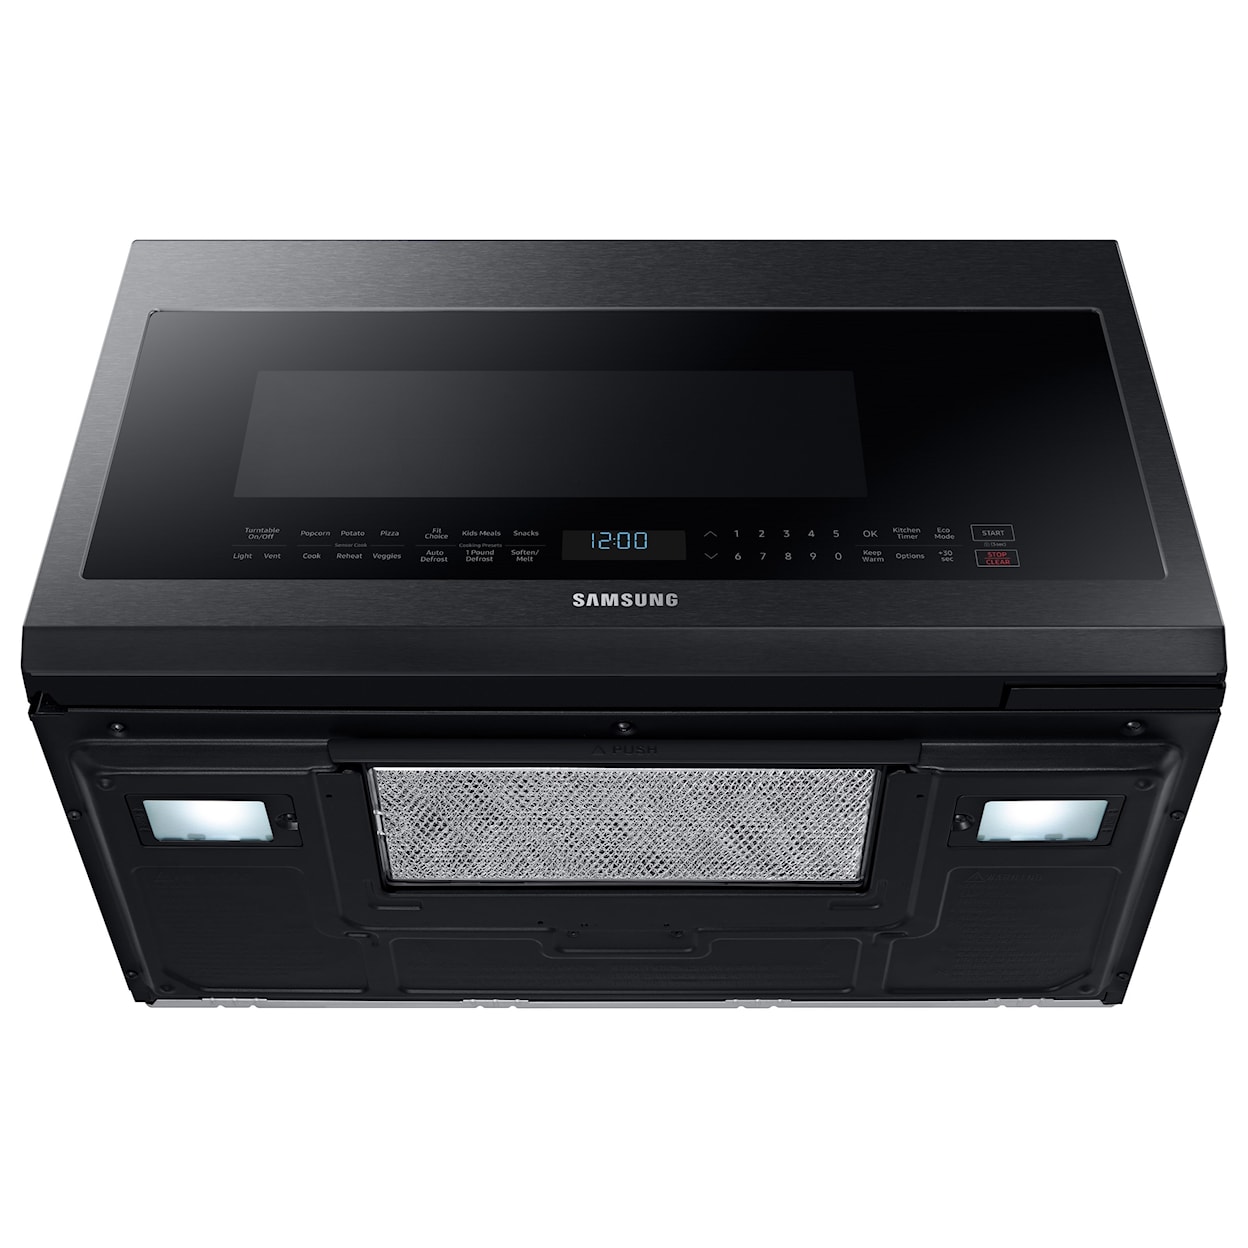 Samsung Appliances Microwaves - Samsung 2.1 cu. ft. Over The Range Microwave